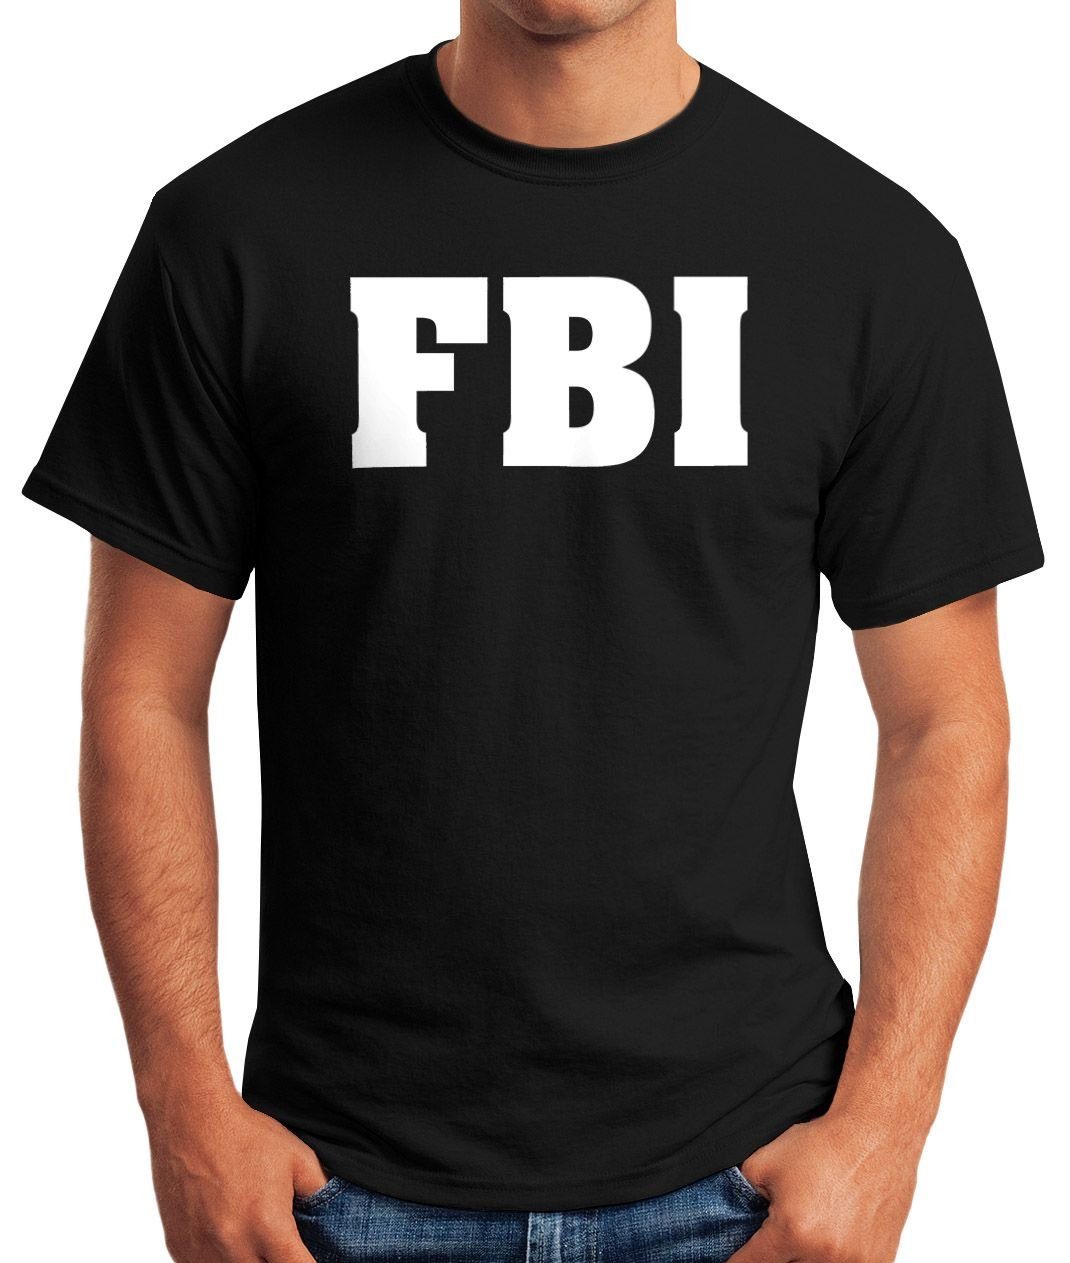 Fun-Shirt Verkleidung Moonworks® mit Kostüm Print Print-Shirt MoonWorks Karneval Faschings-Shirt T-Shirt Herren FBI Aufdruck